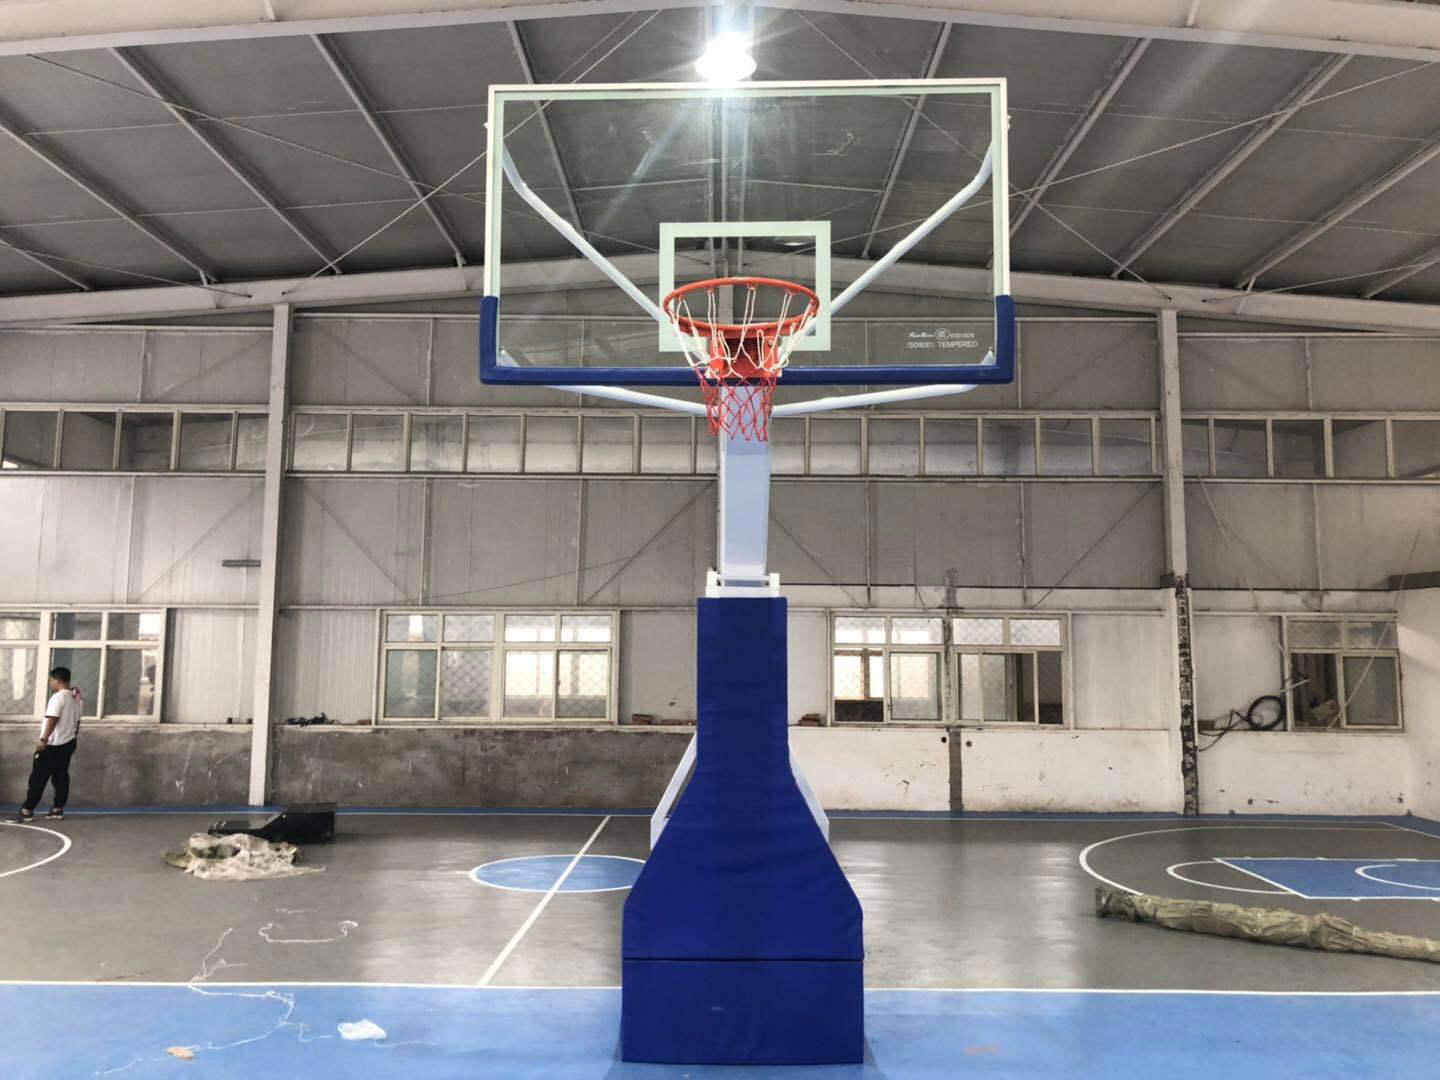 Electronic hydraulic basketball stand